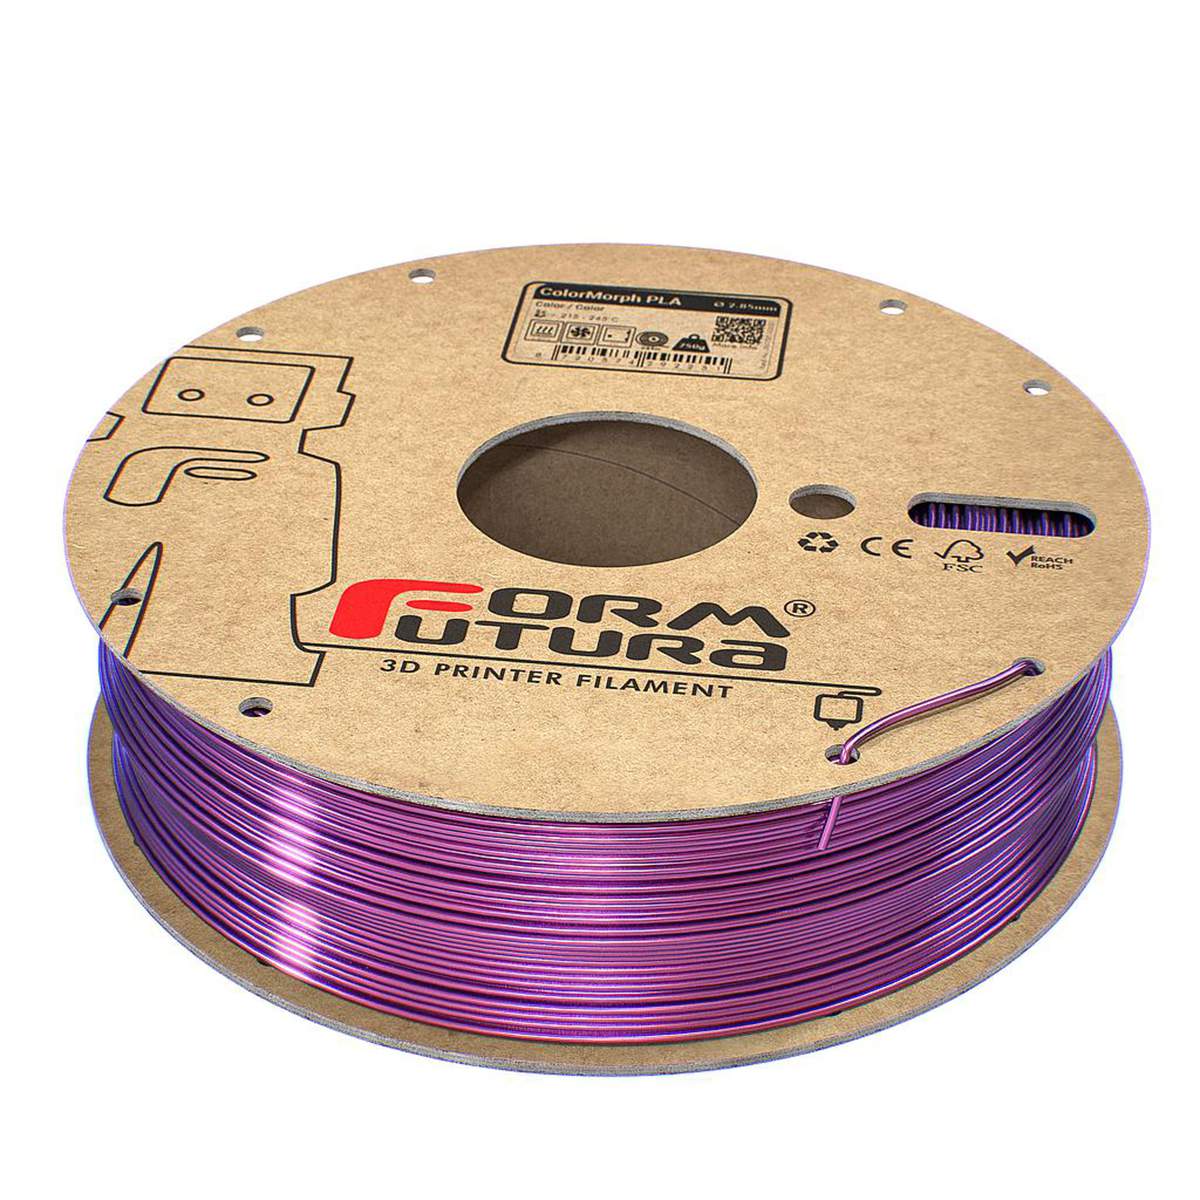 Formfutura - High Gloss PLA - ColorMorph Pink/Violett